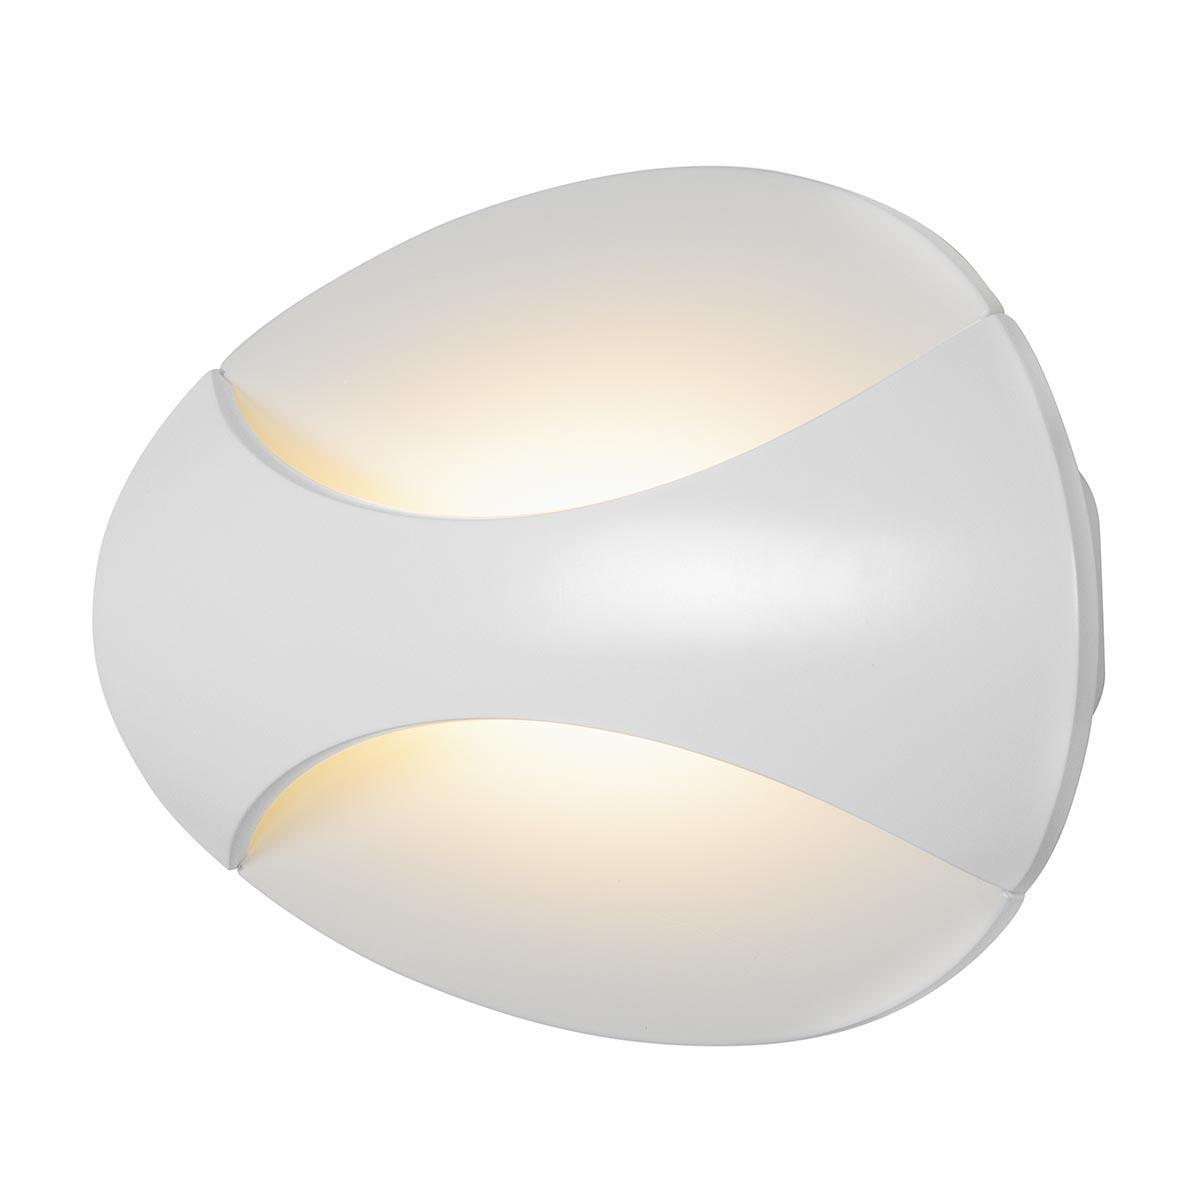 Настенный светодиодный светильник iLedex Flux ZD7151-6W WH matt white сабвуфер piega tmicro sub w matt white laquer matt white laquer